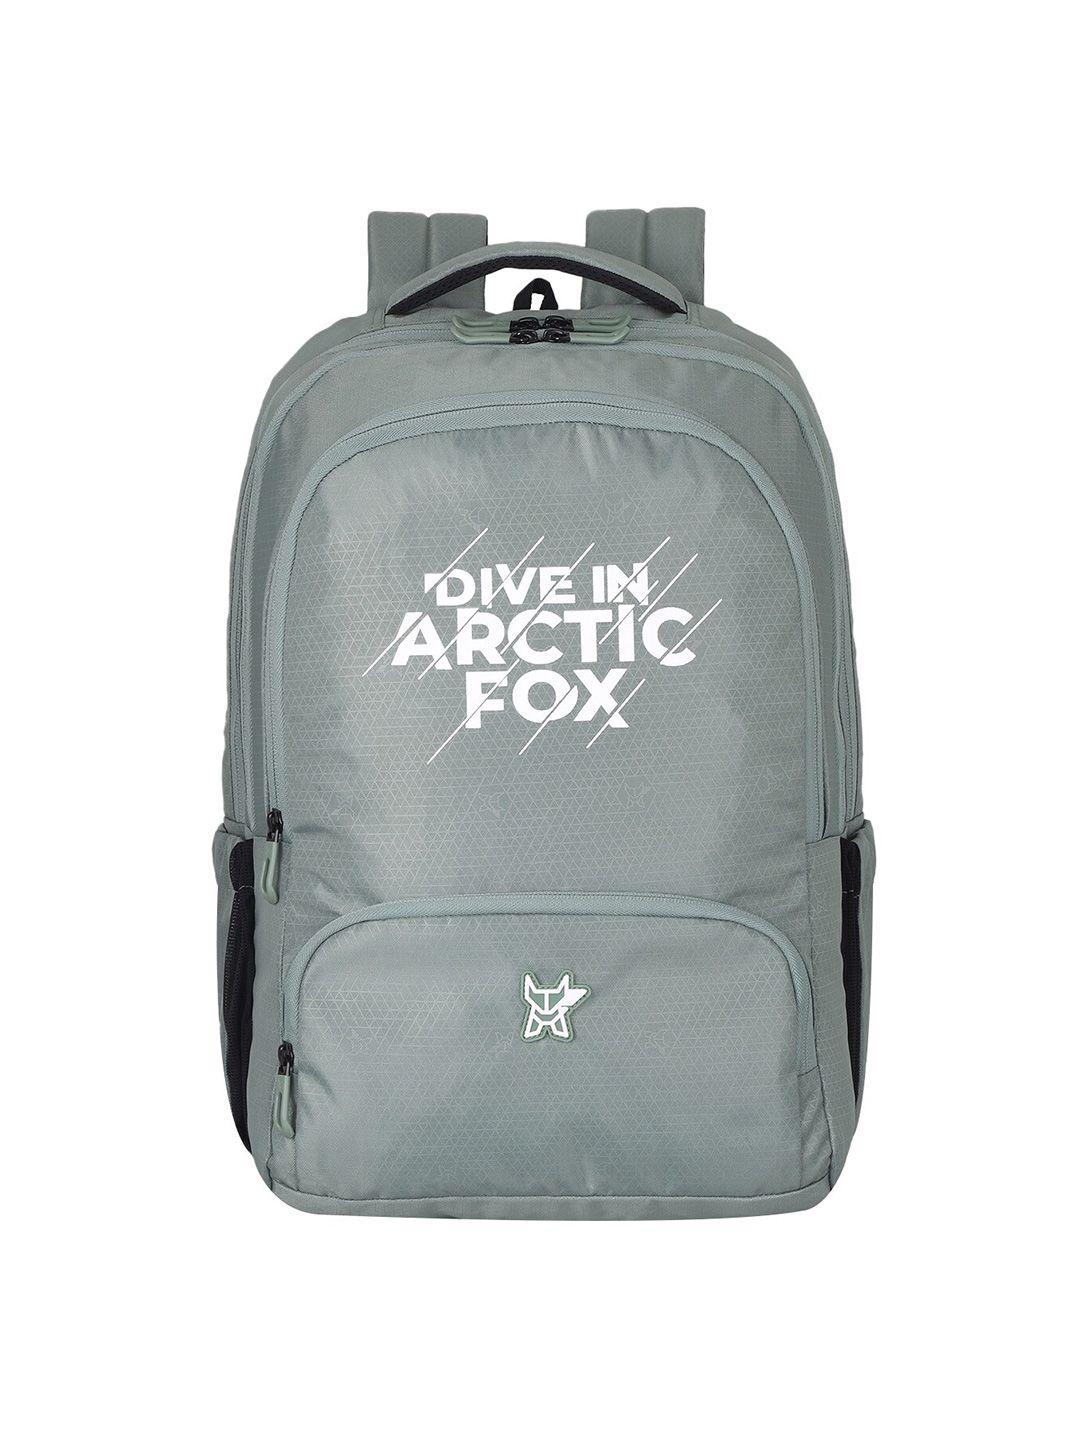 arctic fox printed water resistance laptop bag